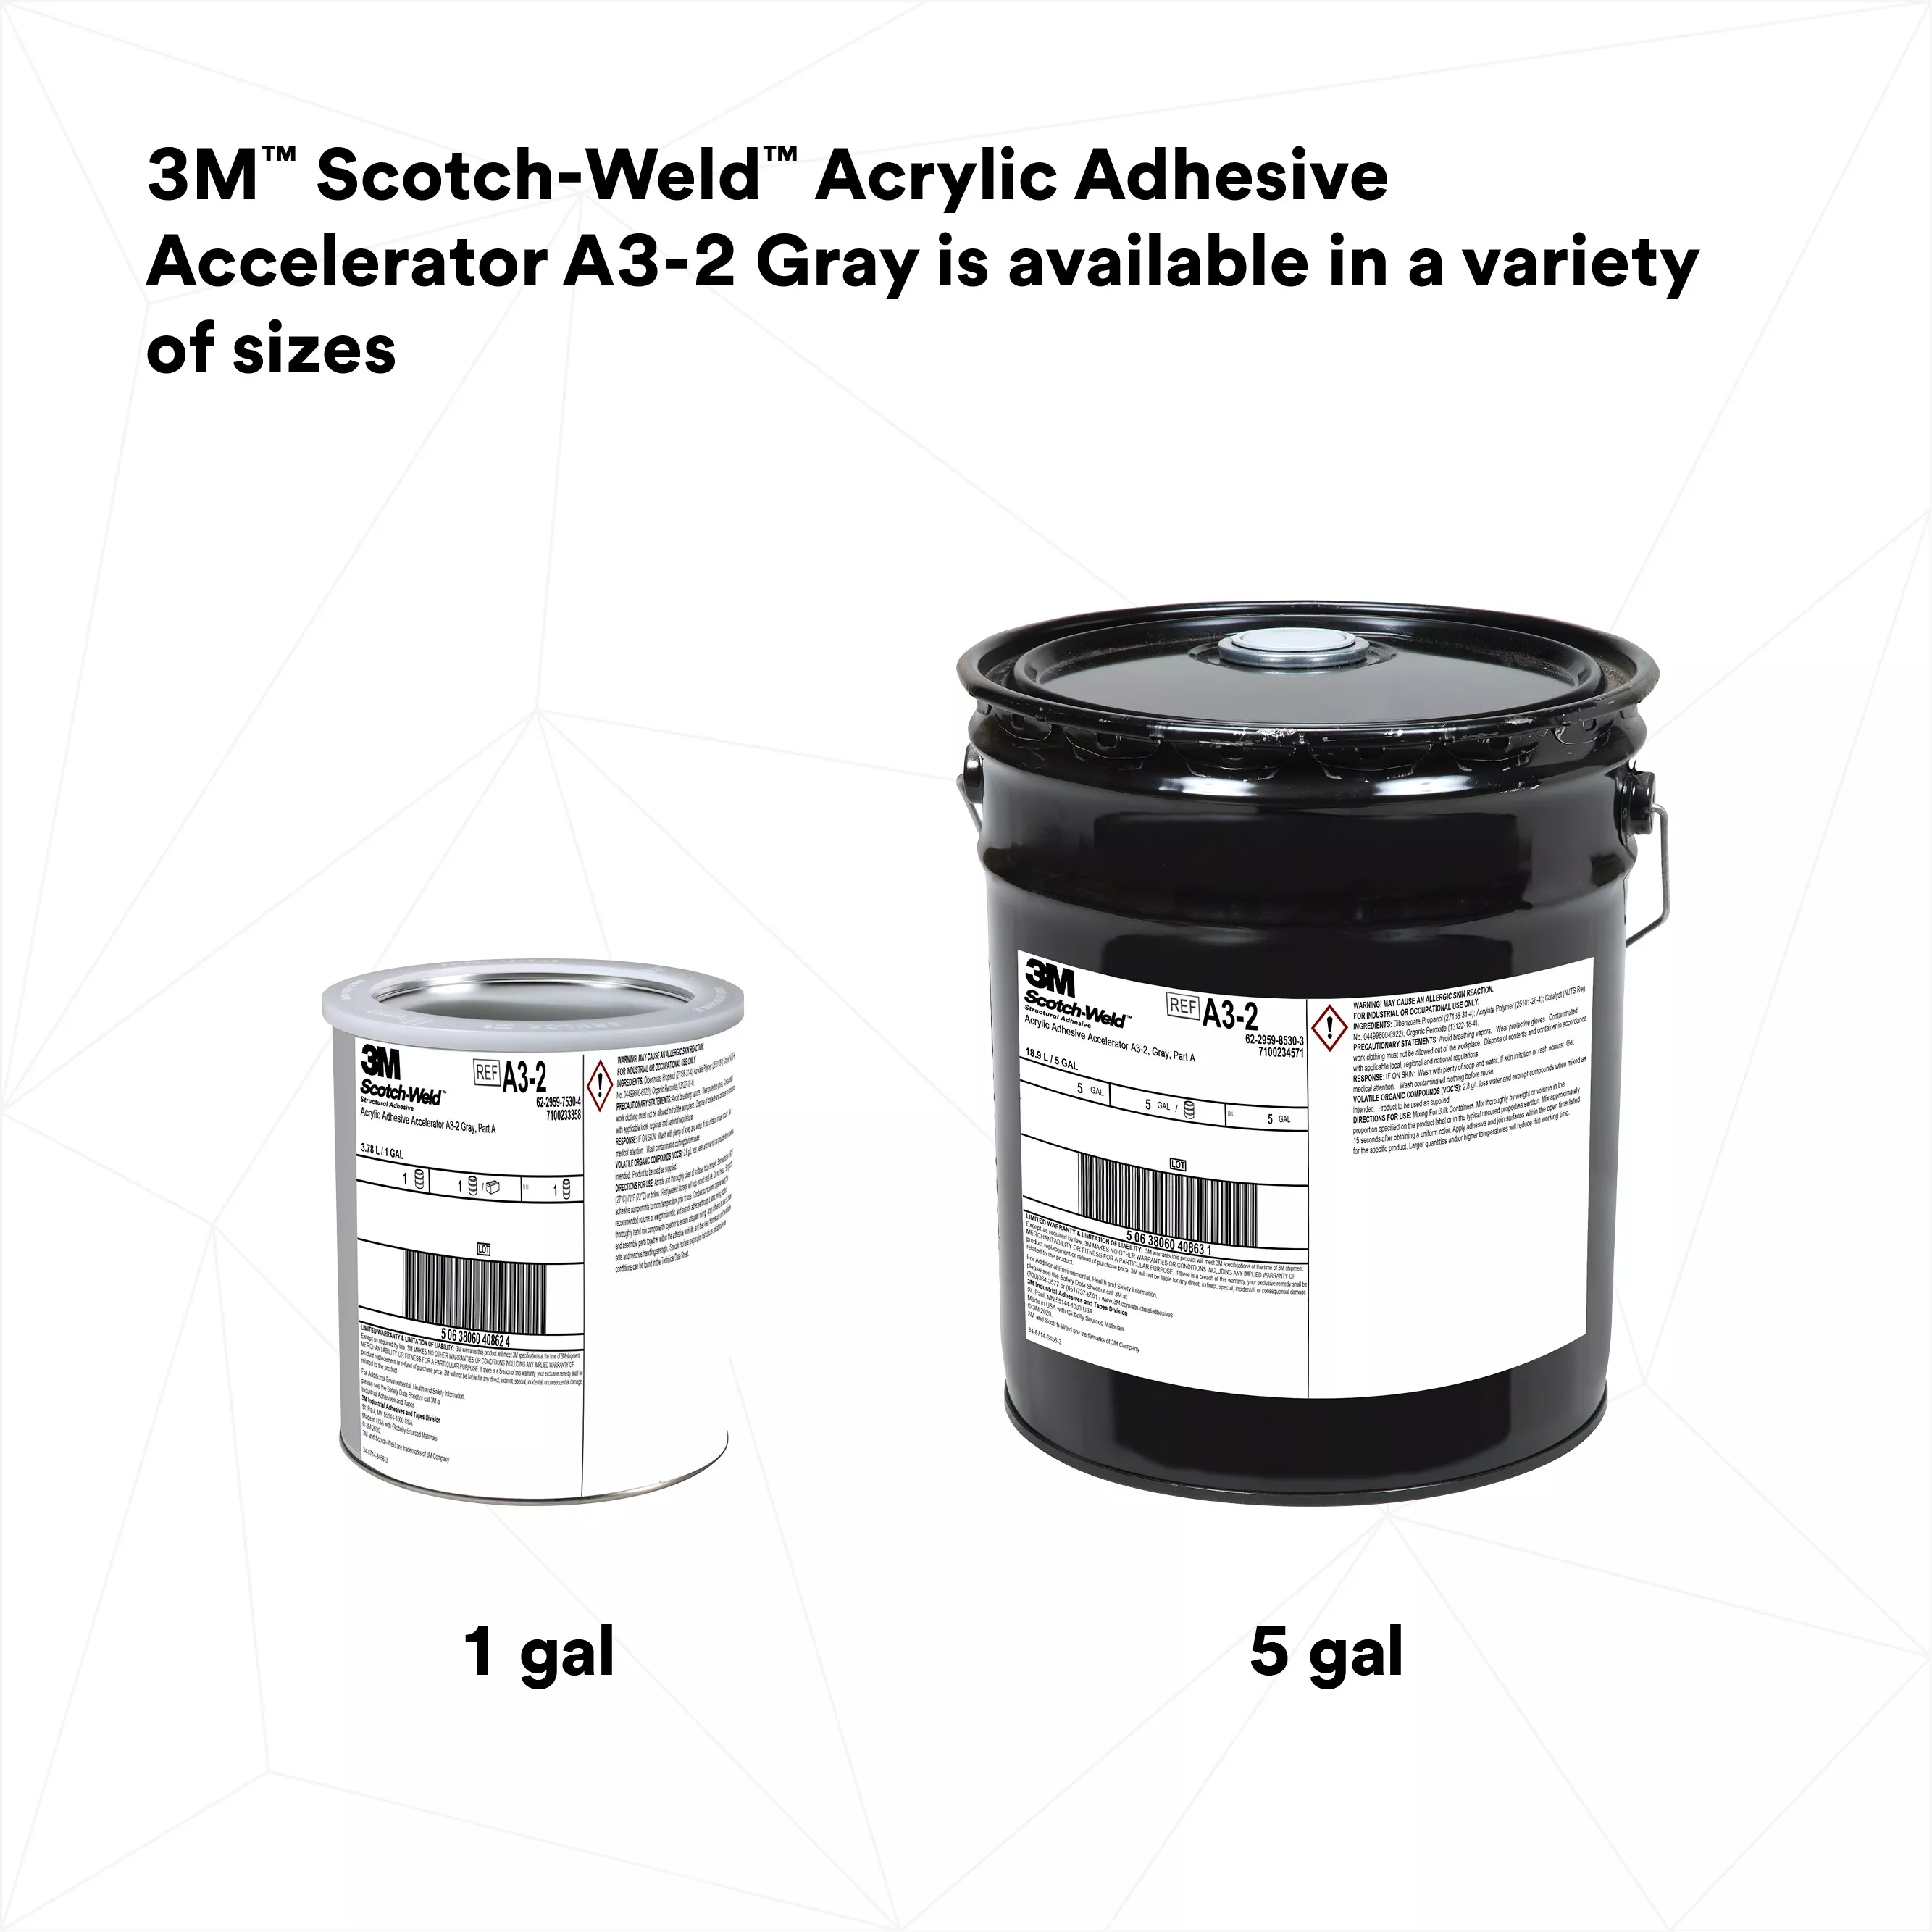 SKU 7100233358 | 3M™ Scotch-Weld™ Acrylic Adhesive Accelerator A3-2